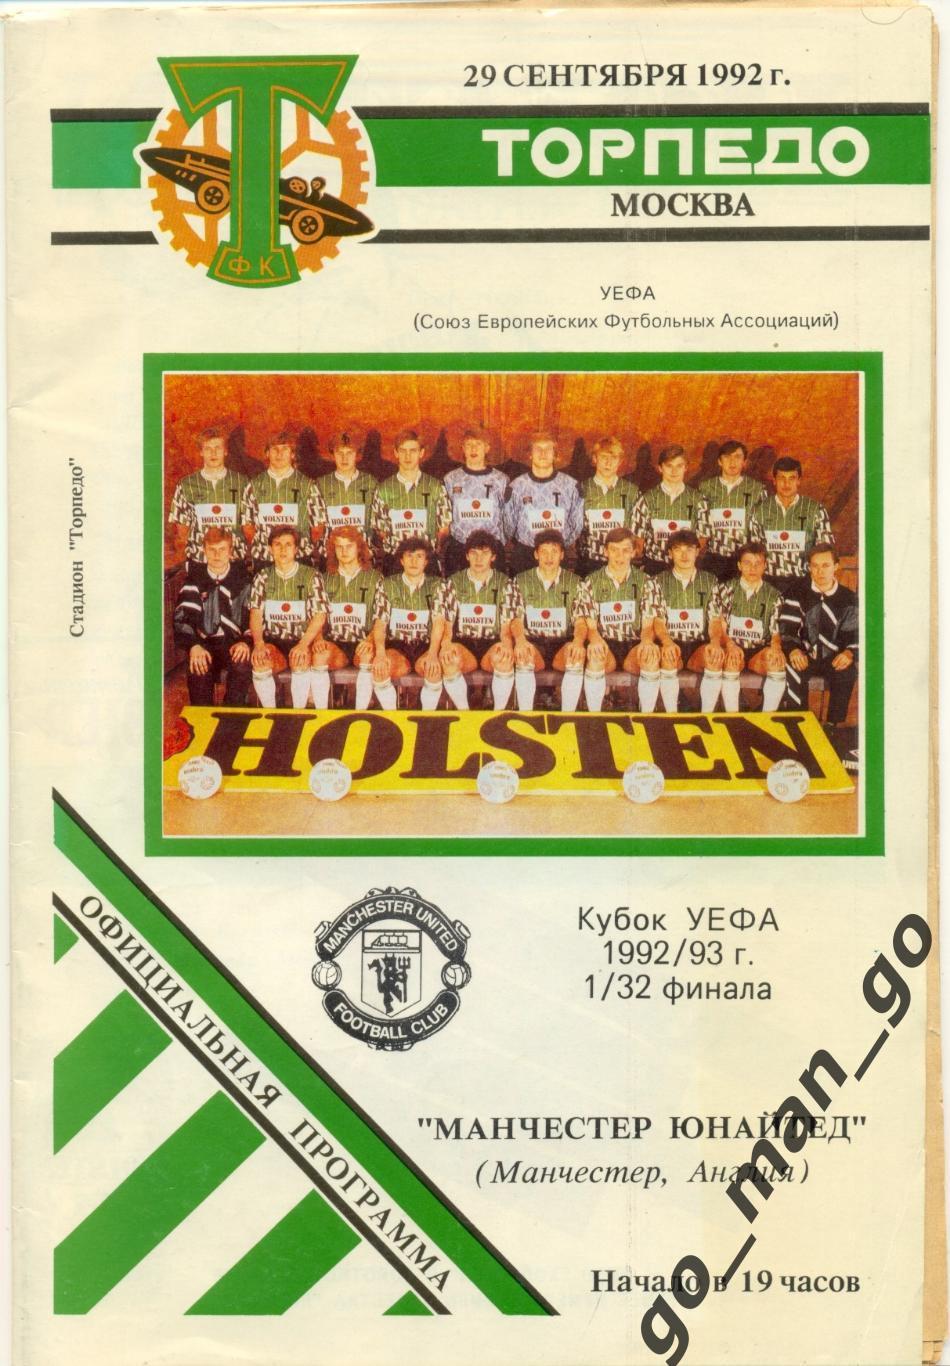 ТОРПЕДО Москва – МАНЧЕСТЕР ЮНАЙТЕД 29.09.1992, кубок УЕФА, 1/32 финала, Holsten.